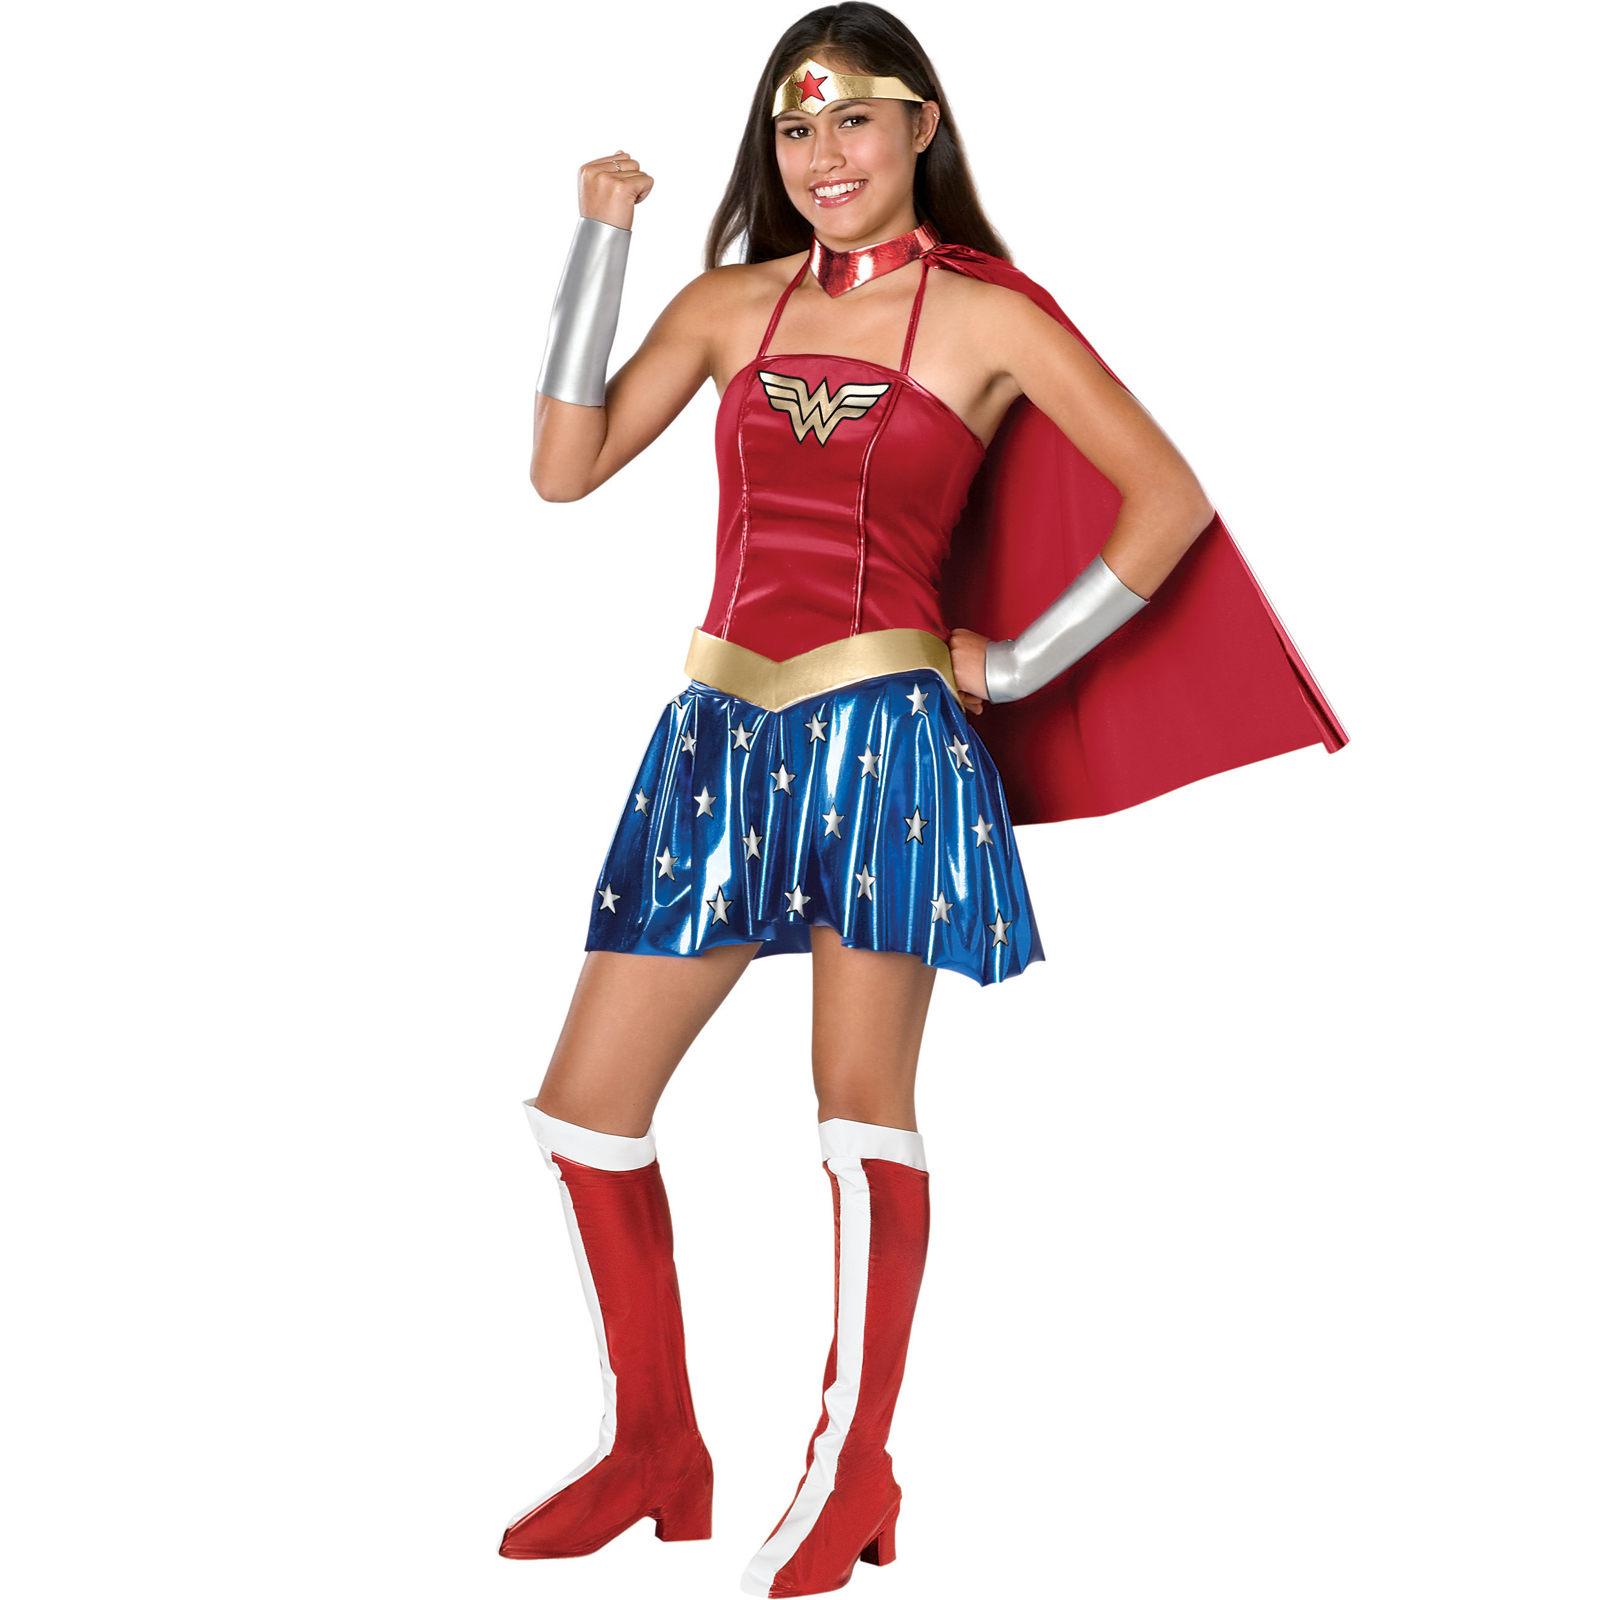 Justice League Teen Wonder Woman Costume, Red, Teen